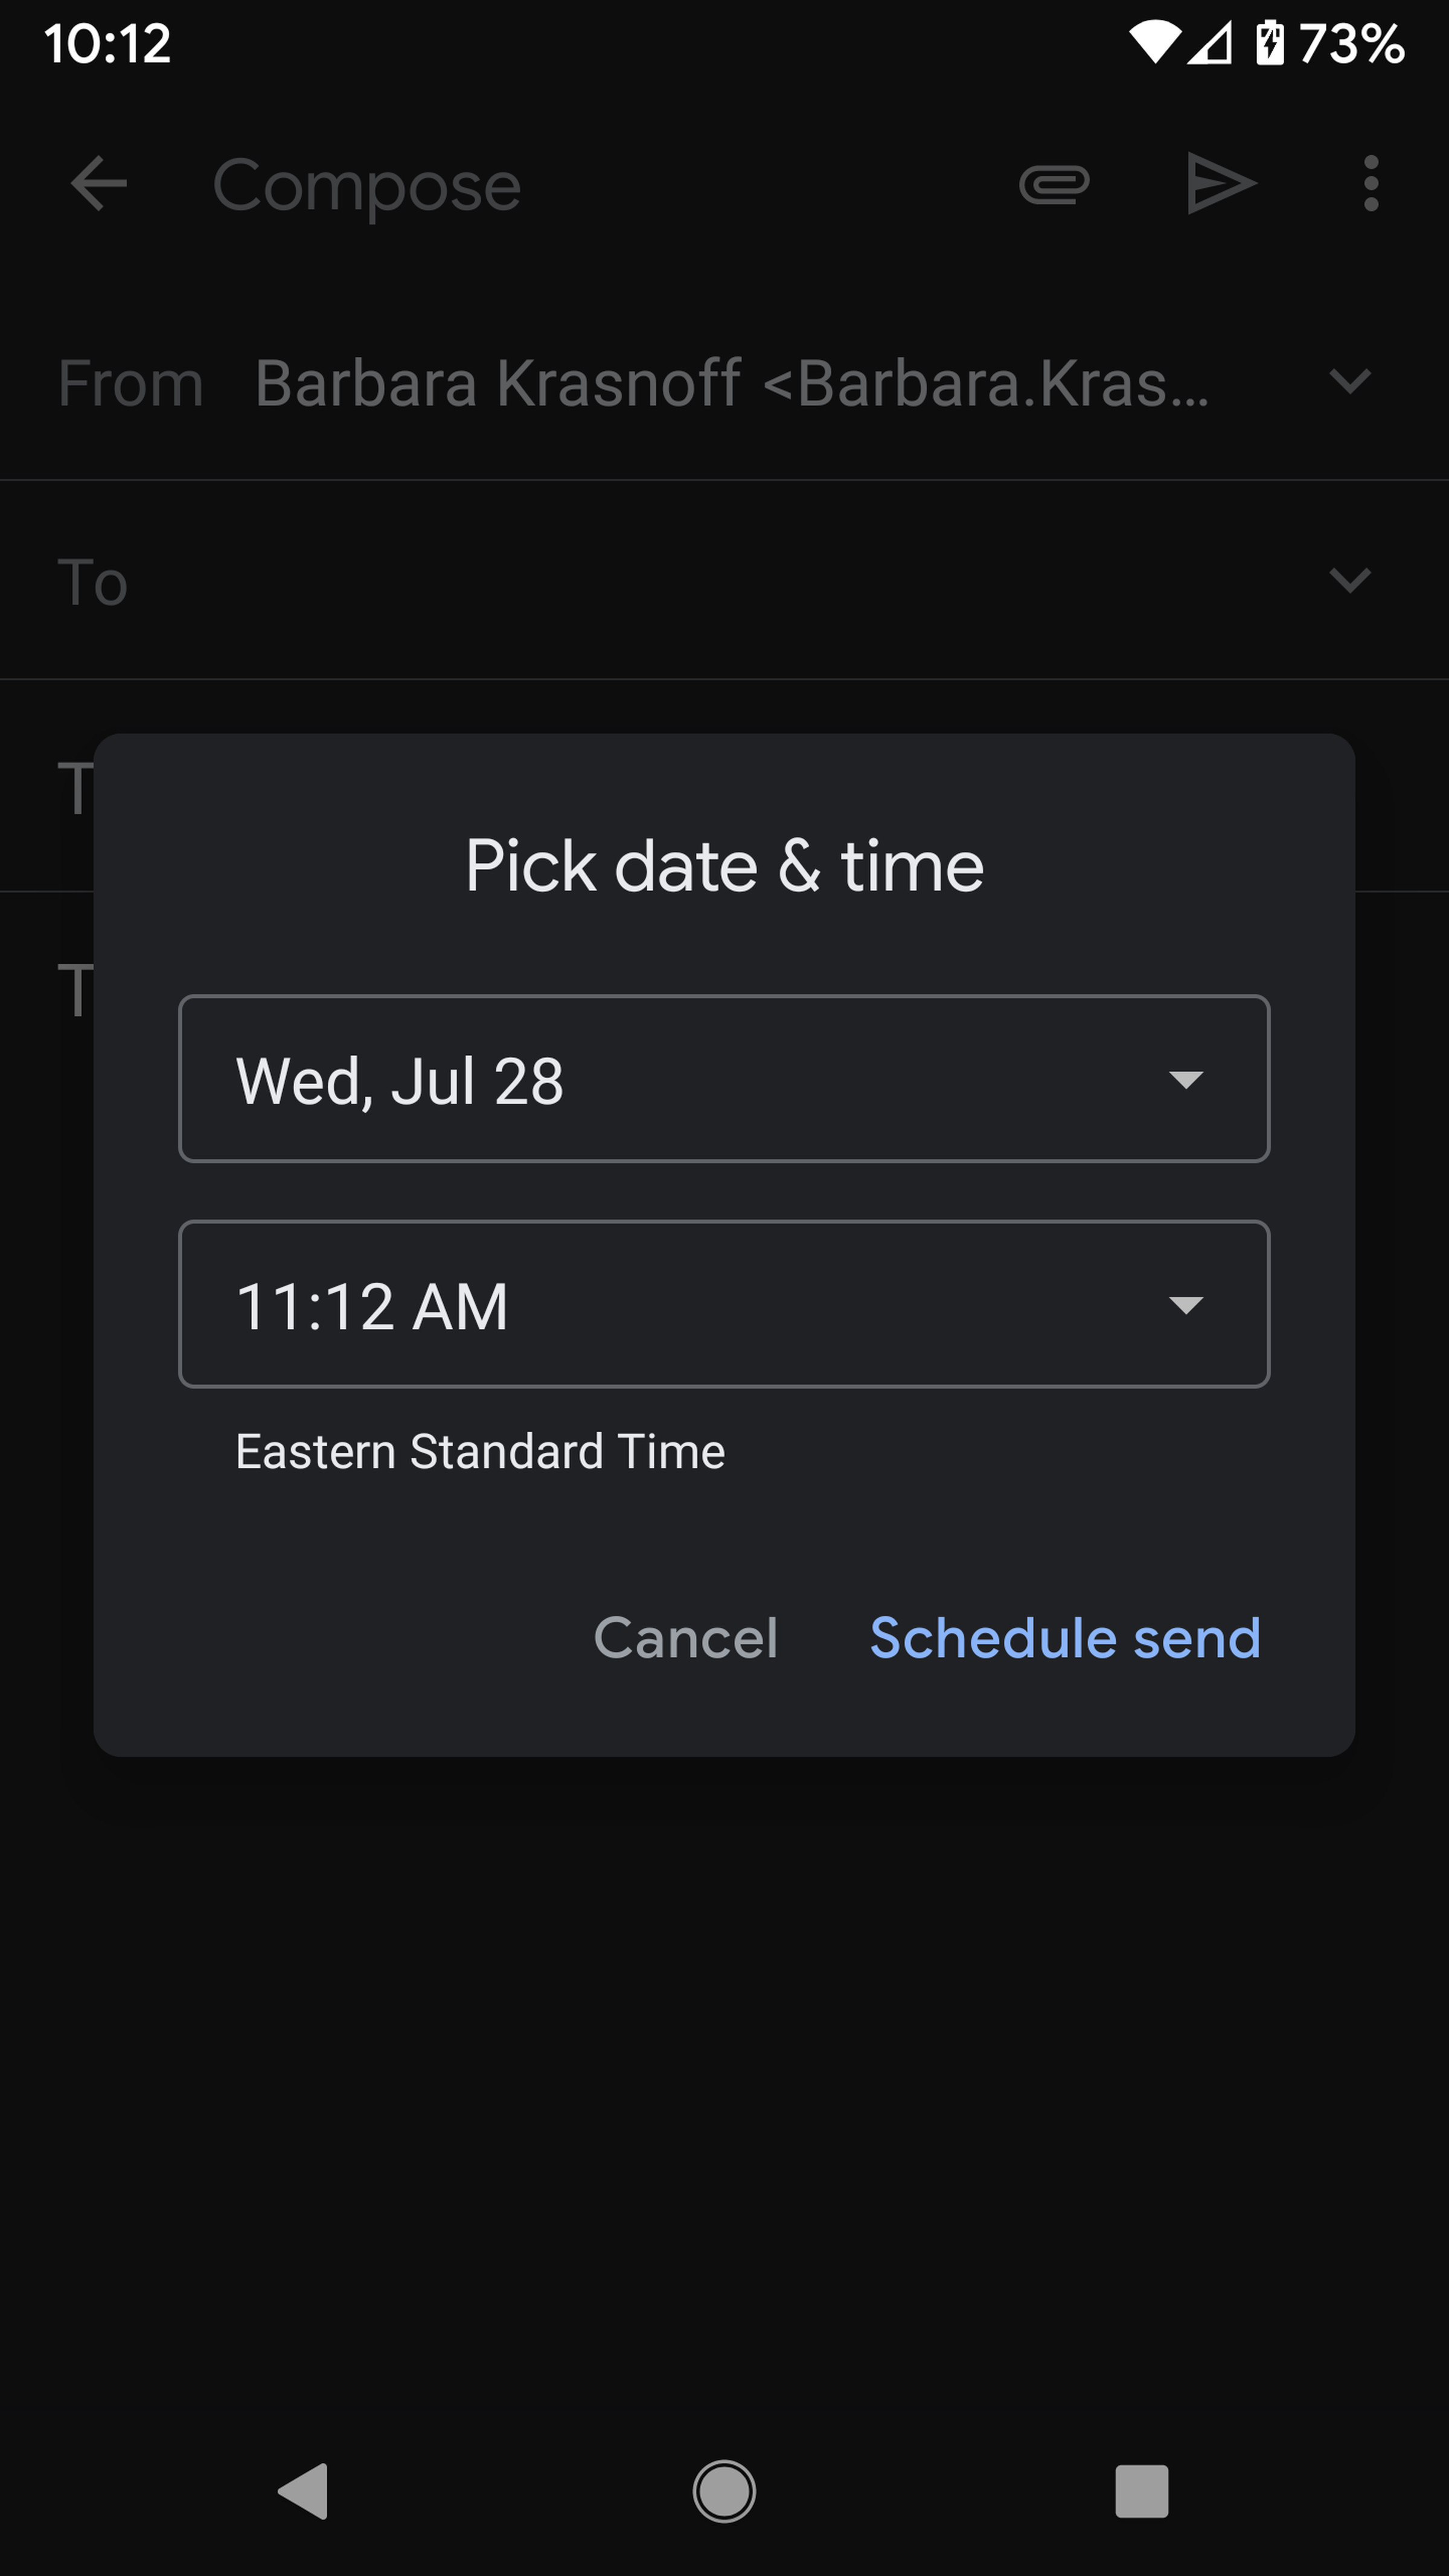 When you’re done, click “Schedule send”